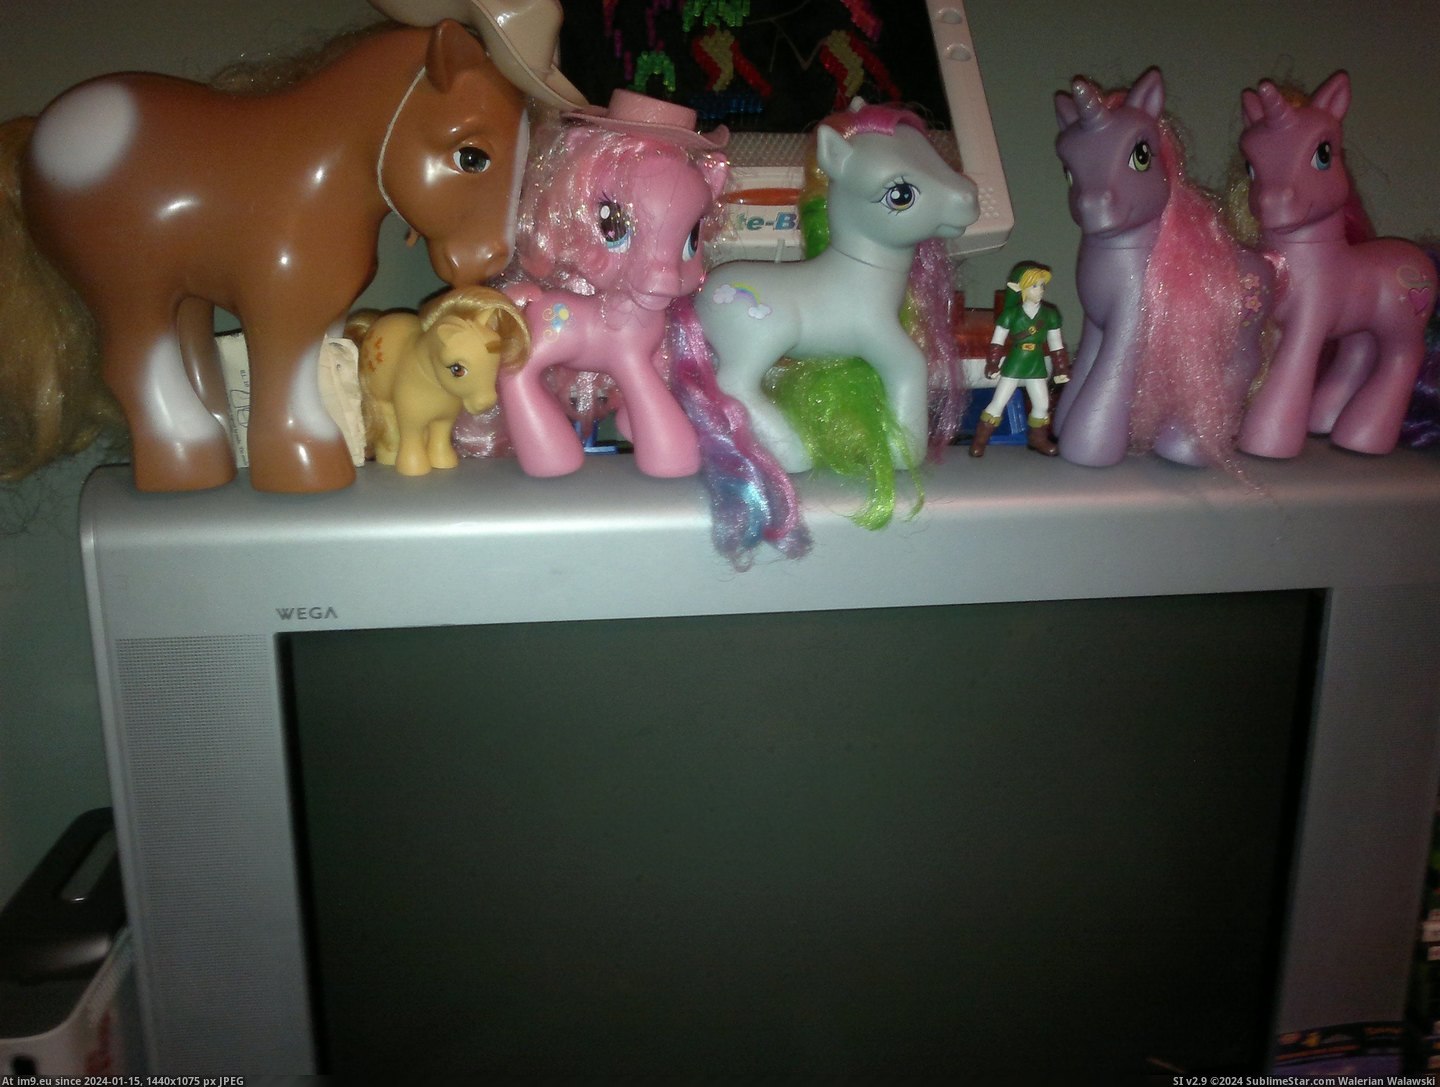  #Ponies  Ponies 2 Pic. (Obraz z album Jennifer))